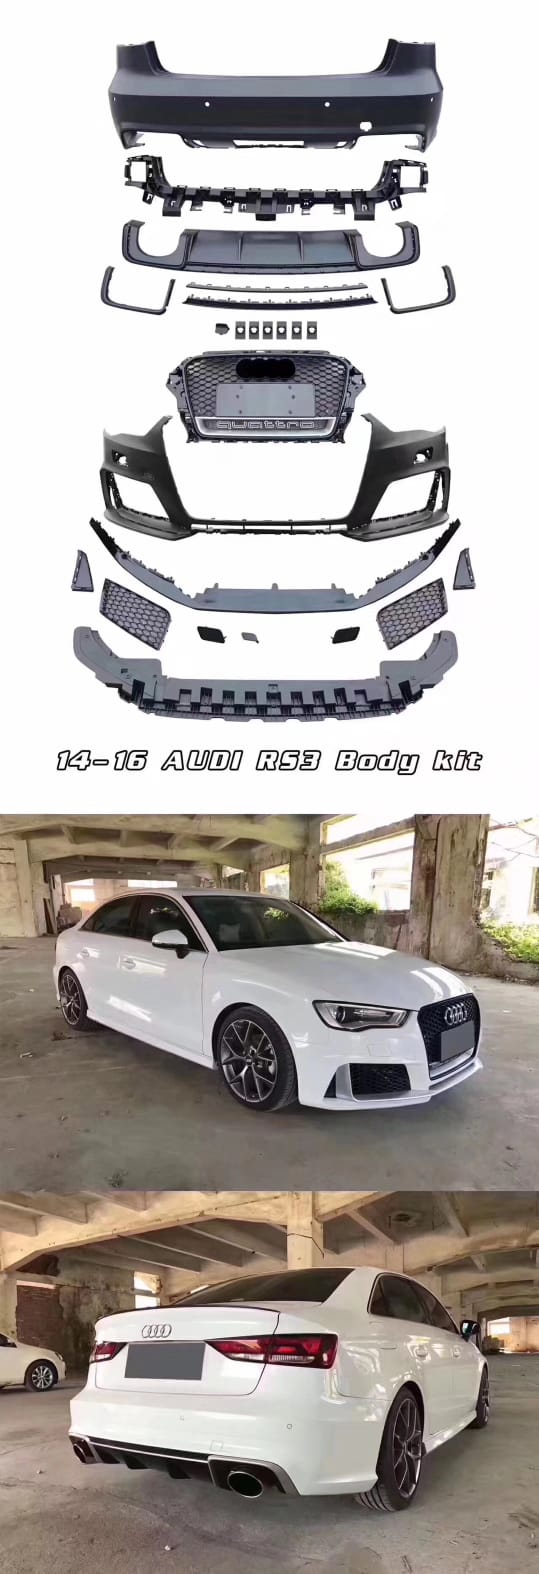 Audi A3 '13-'16 ( RS3 Style ) Body Kit